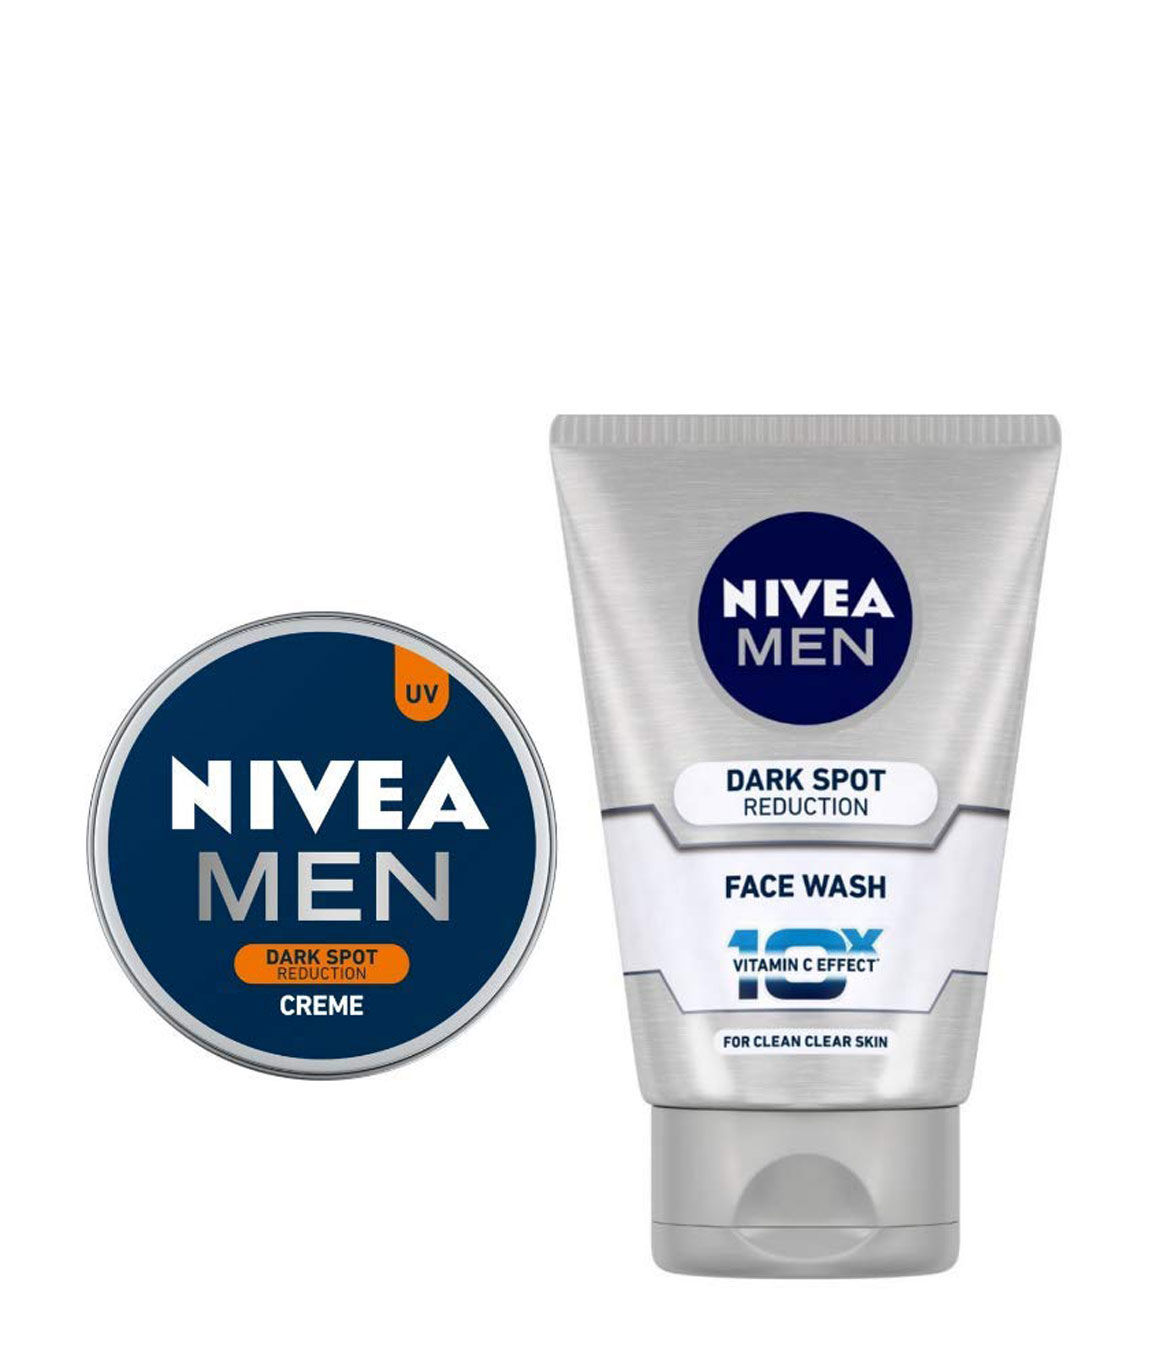 NIVEA MEN Cream, Dark Spot Reduction, 30ml and NIVEA MEN Face Wash, Dark Spot Reduction, 100ml